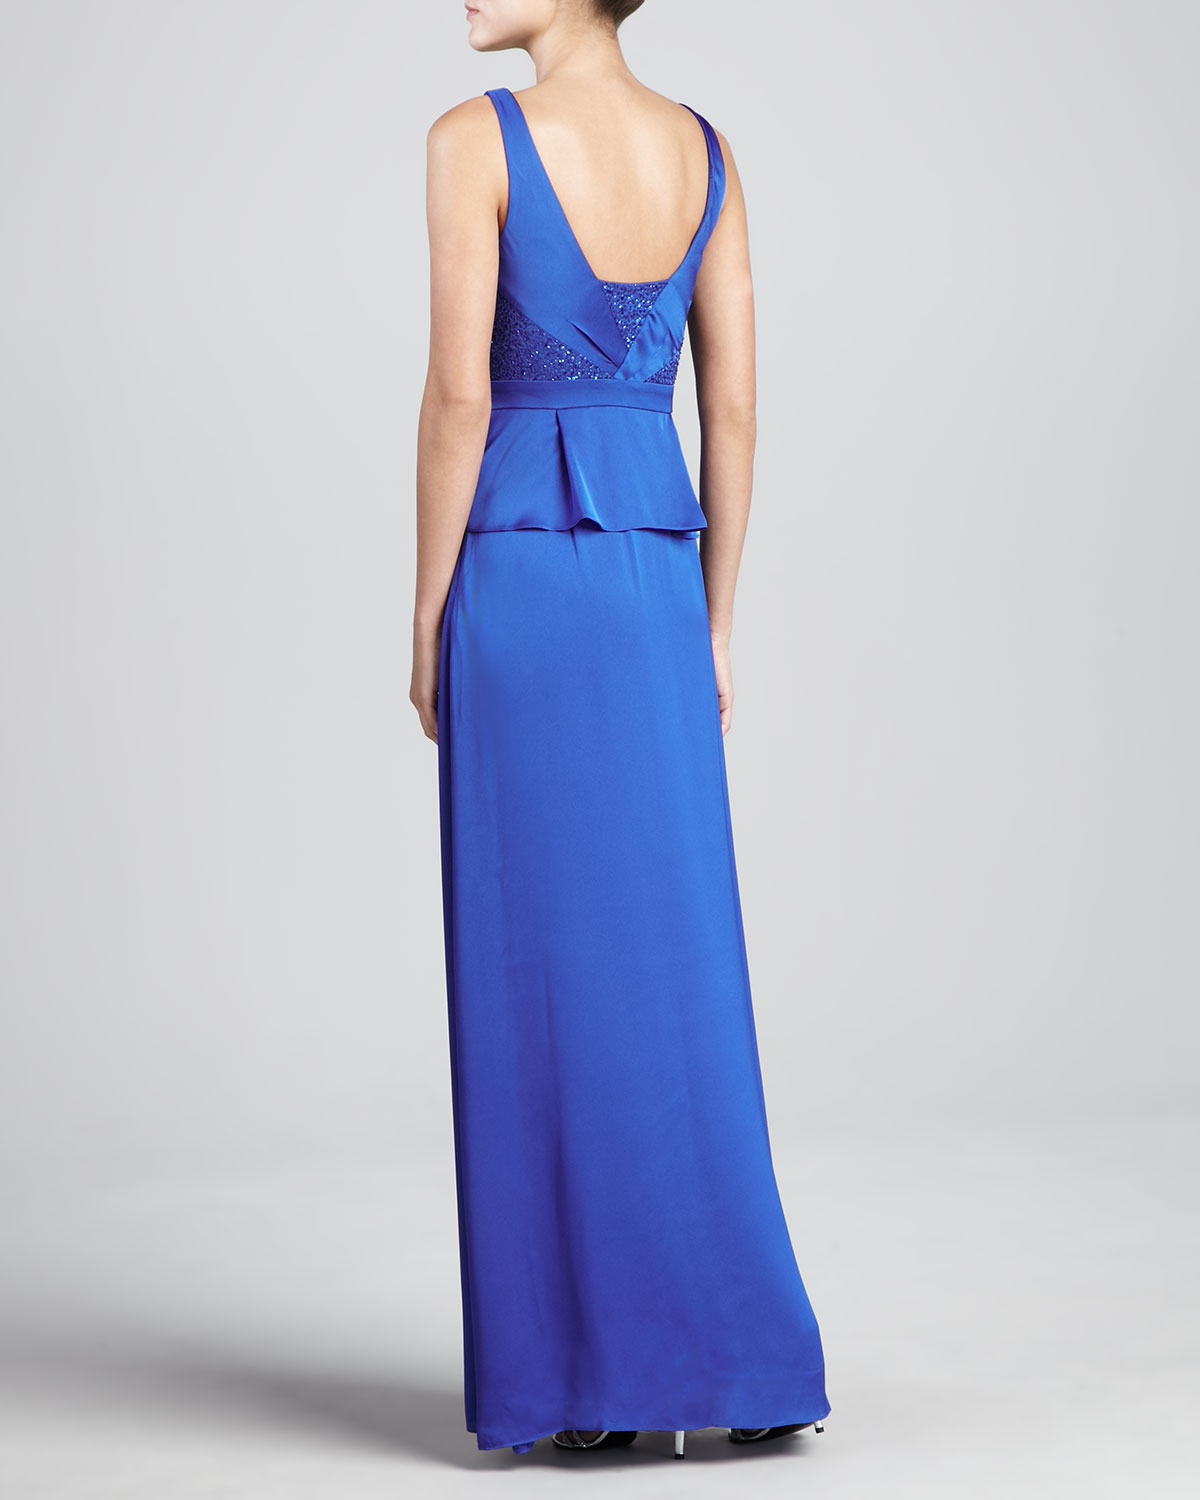 Lyst - Aidan Mattox Beadedbodice Long Gown in Blue